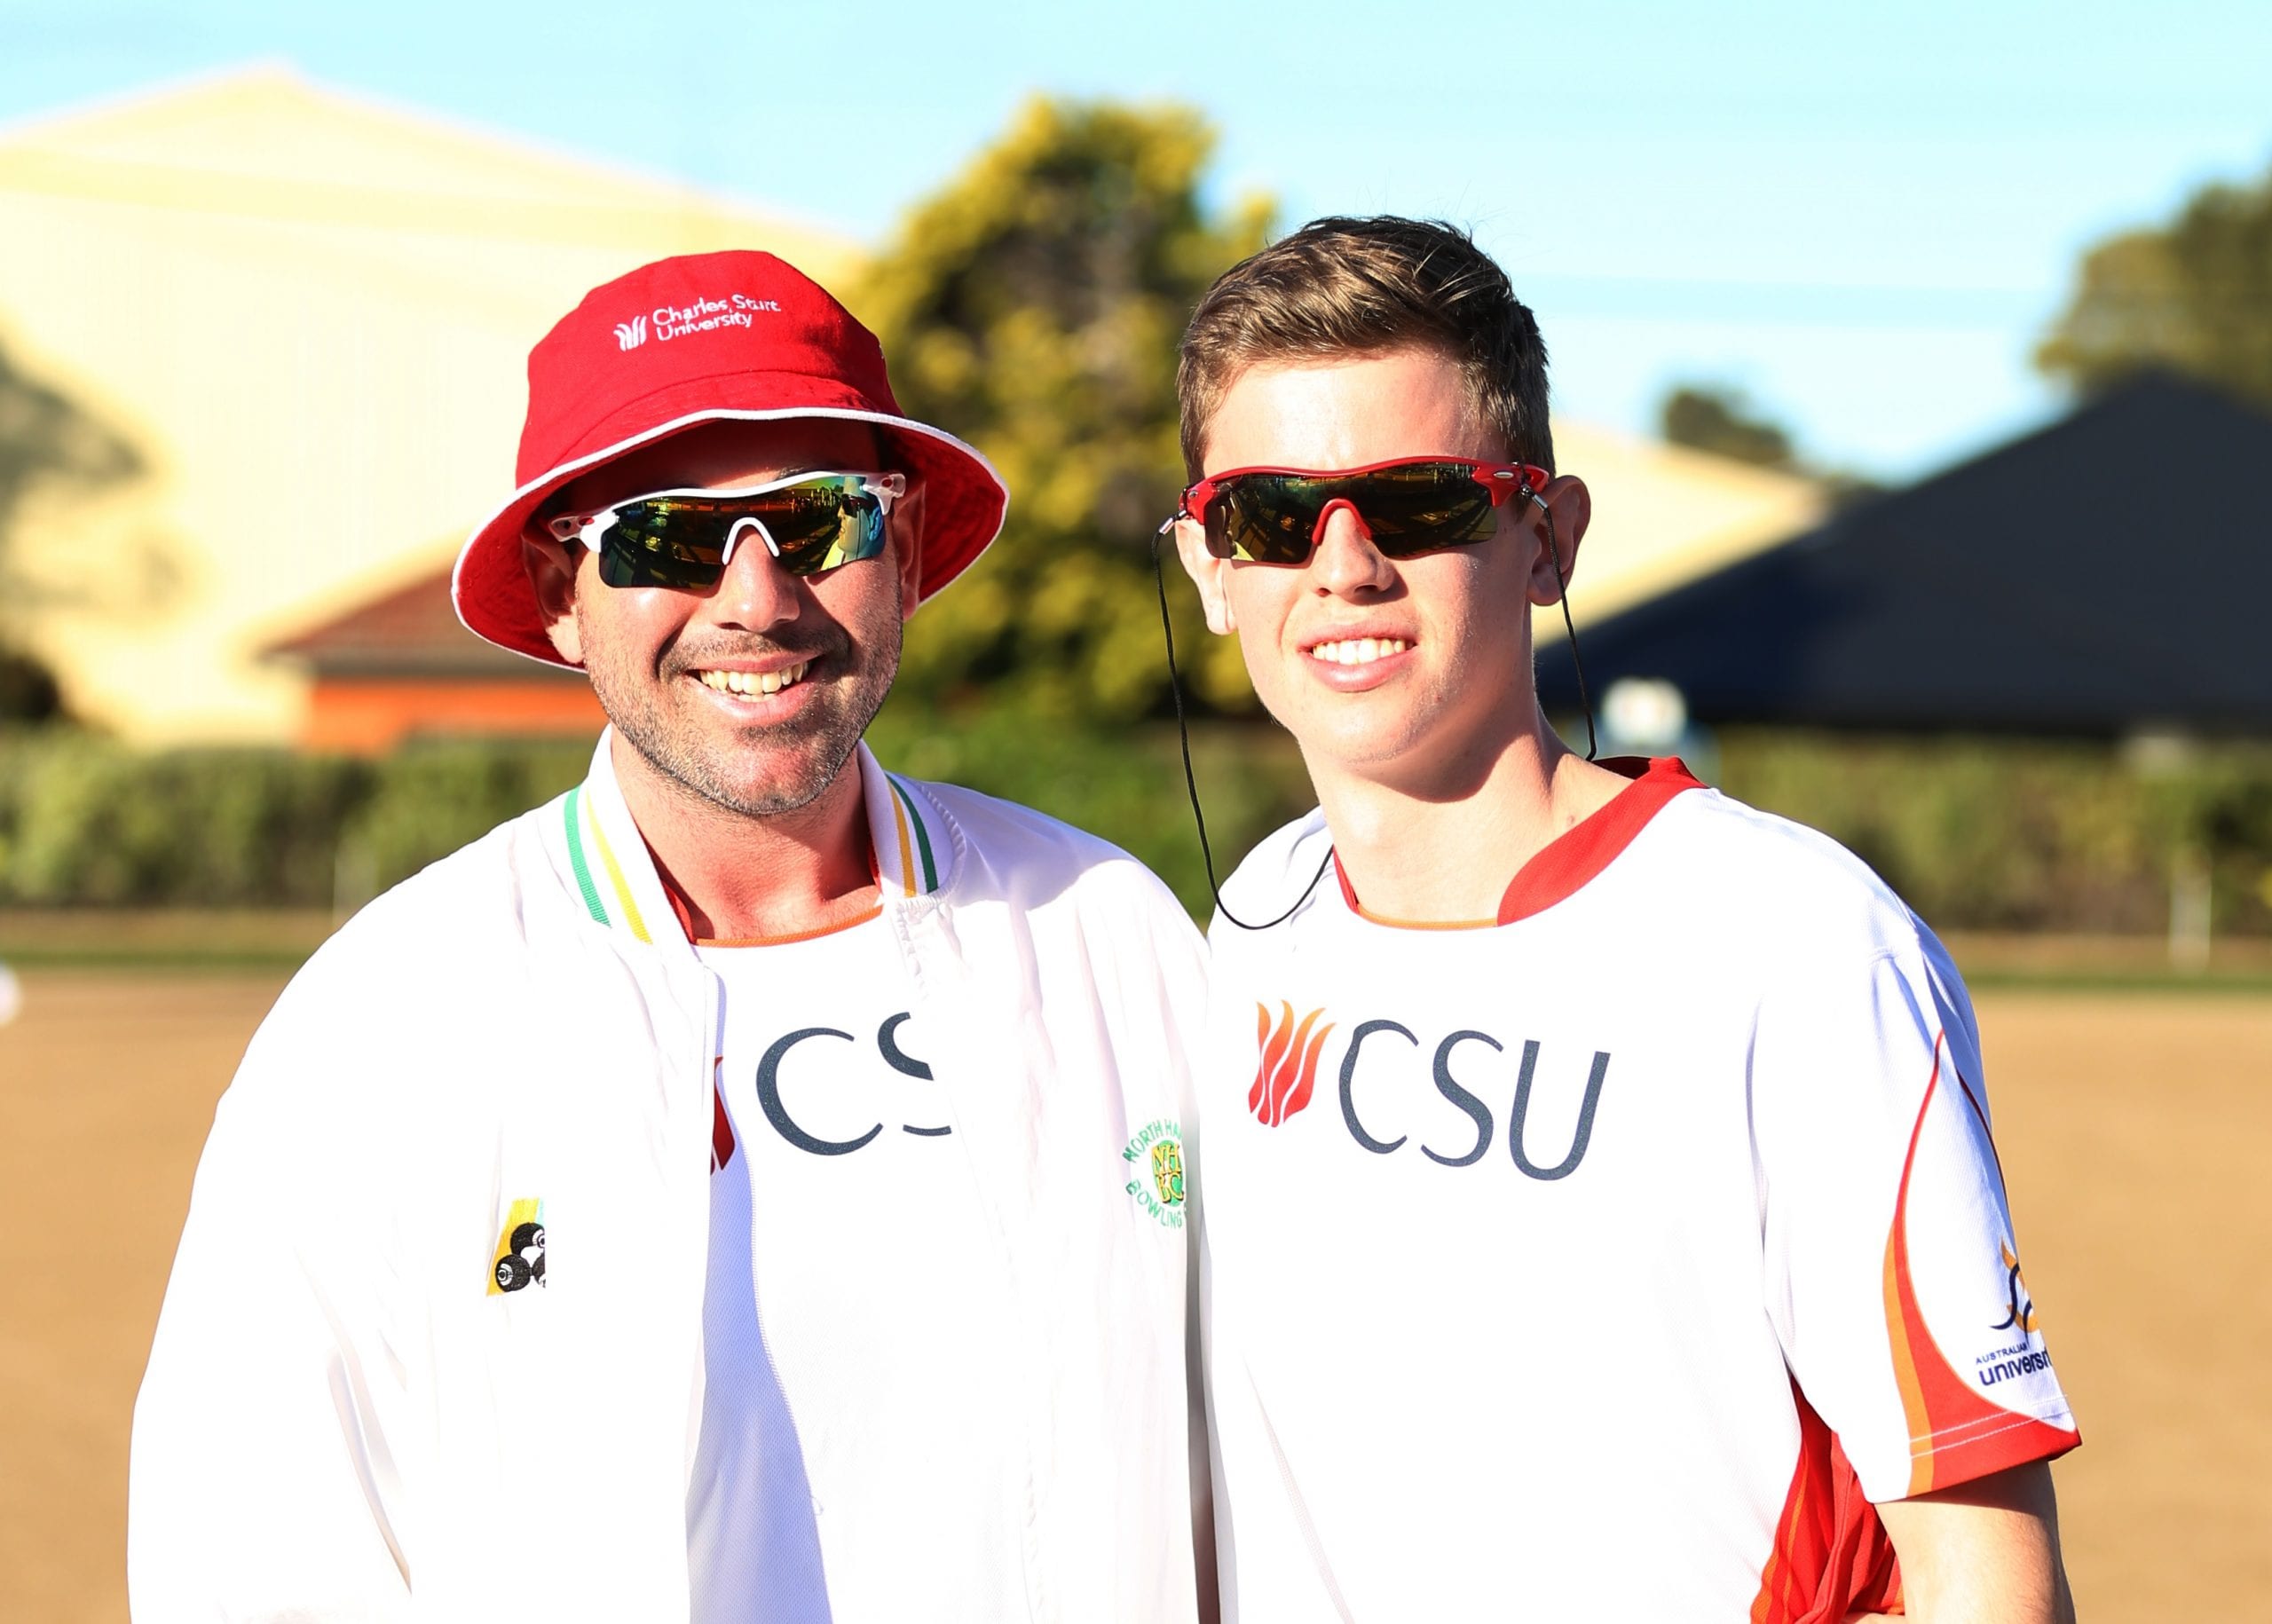 Michael Maxwell and Alex Turner in CSU sport uniforms at Uni Games